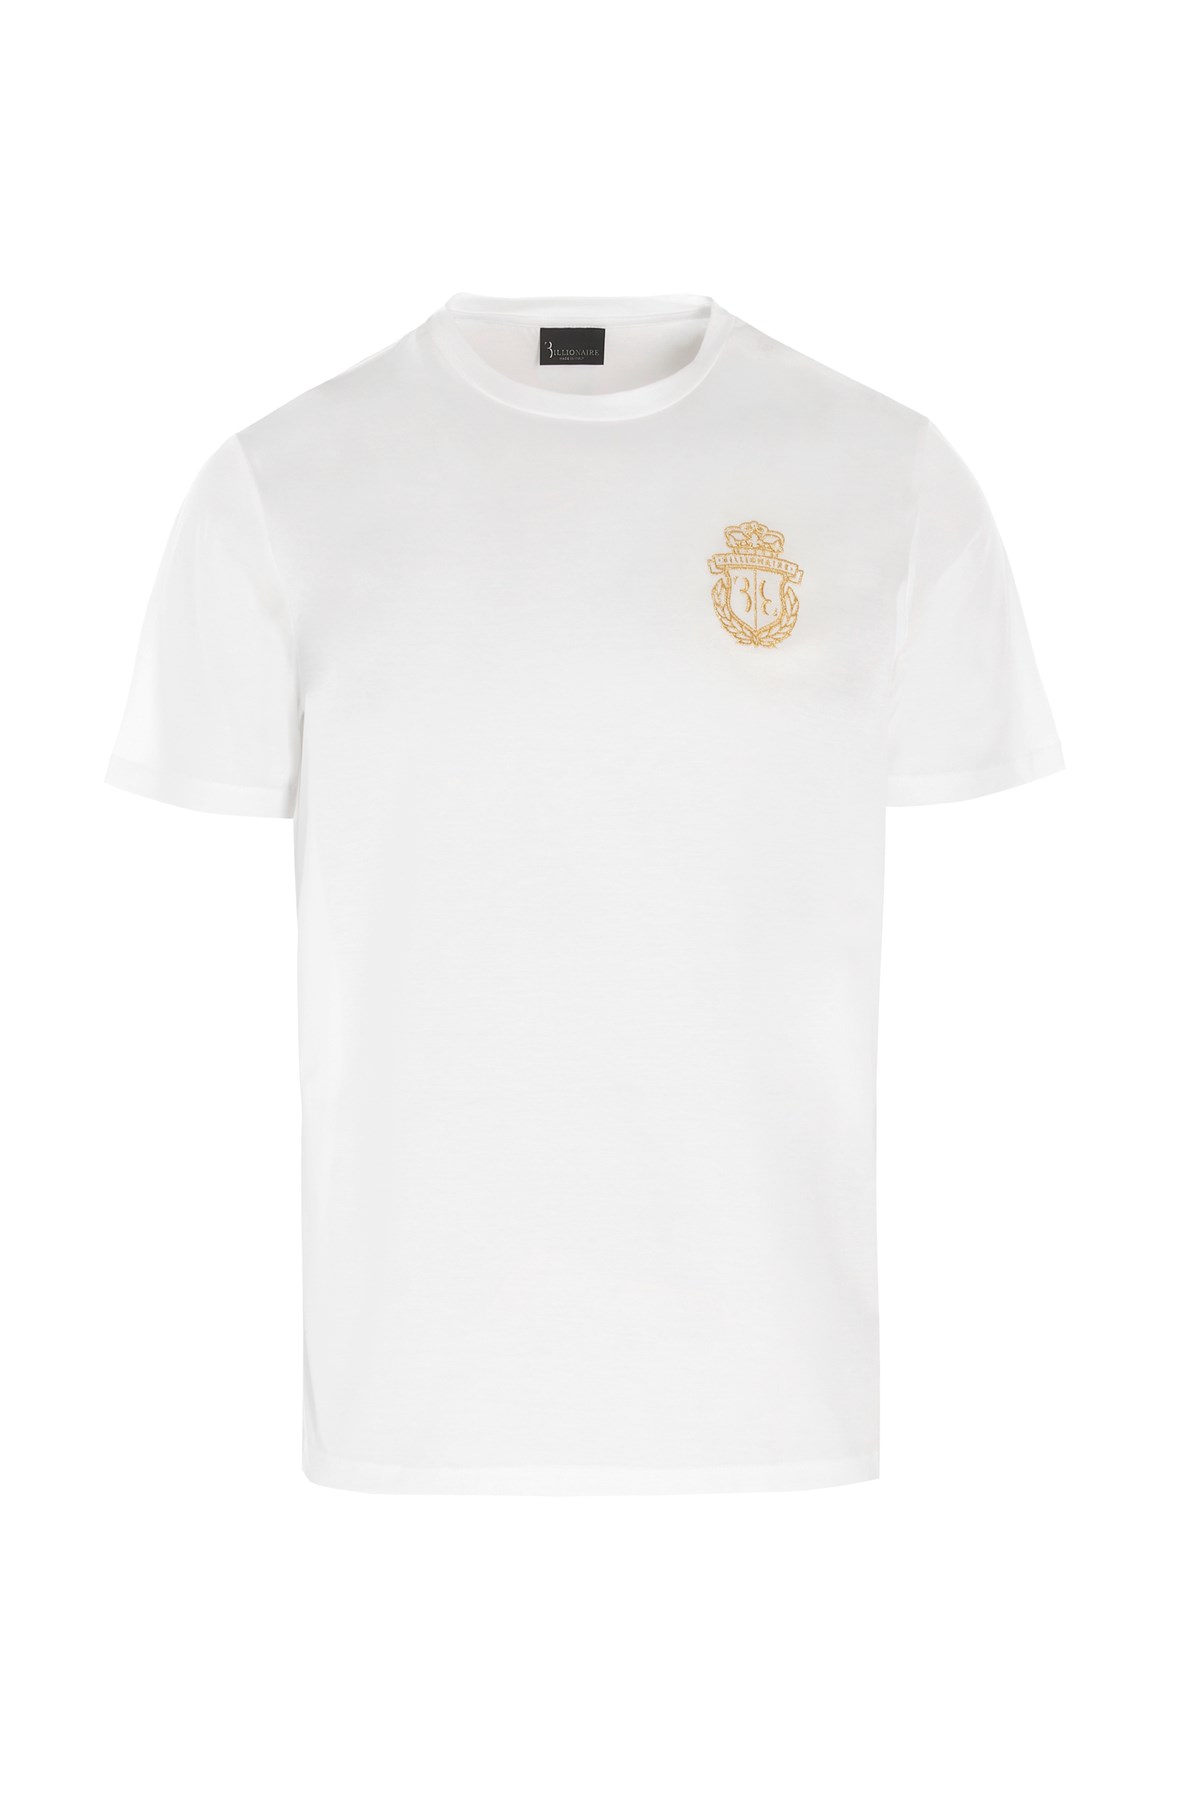 BILLIONAIRE Crest Logo T-Shirt